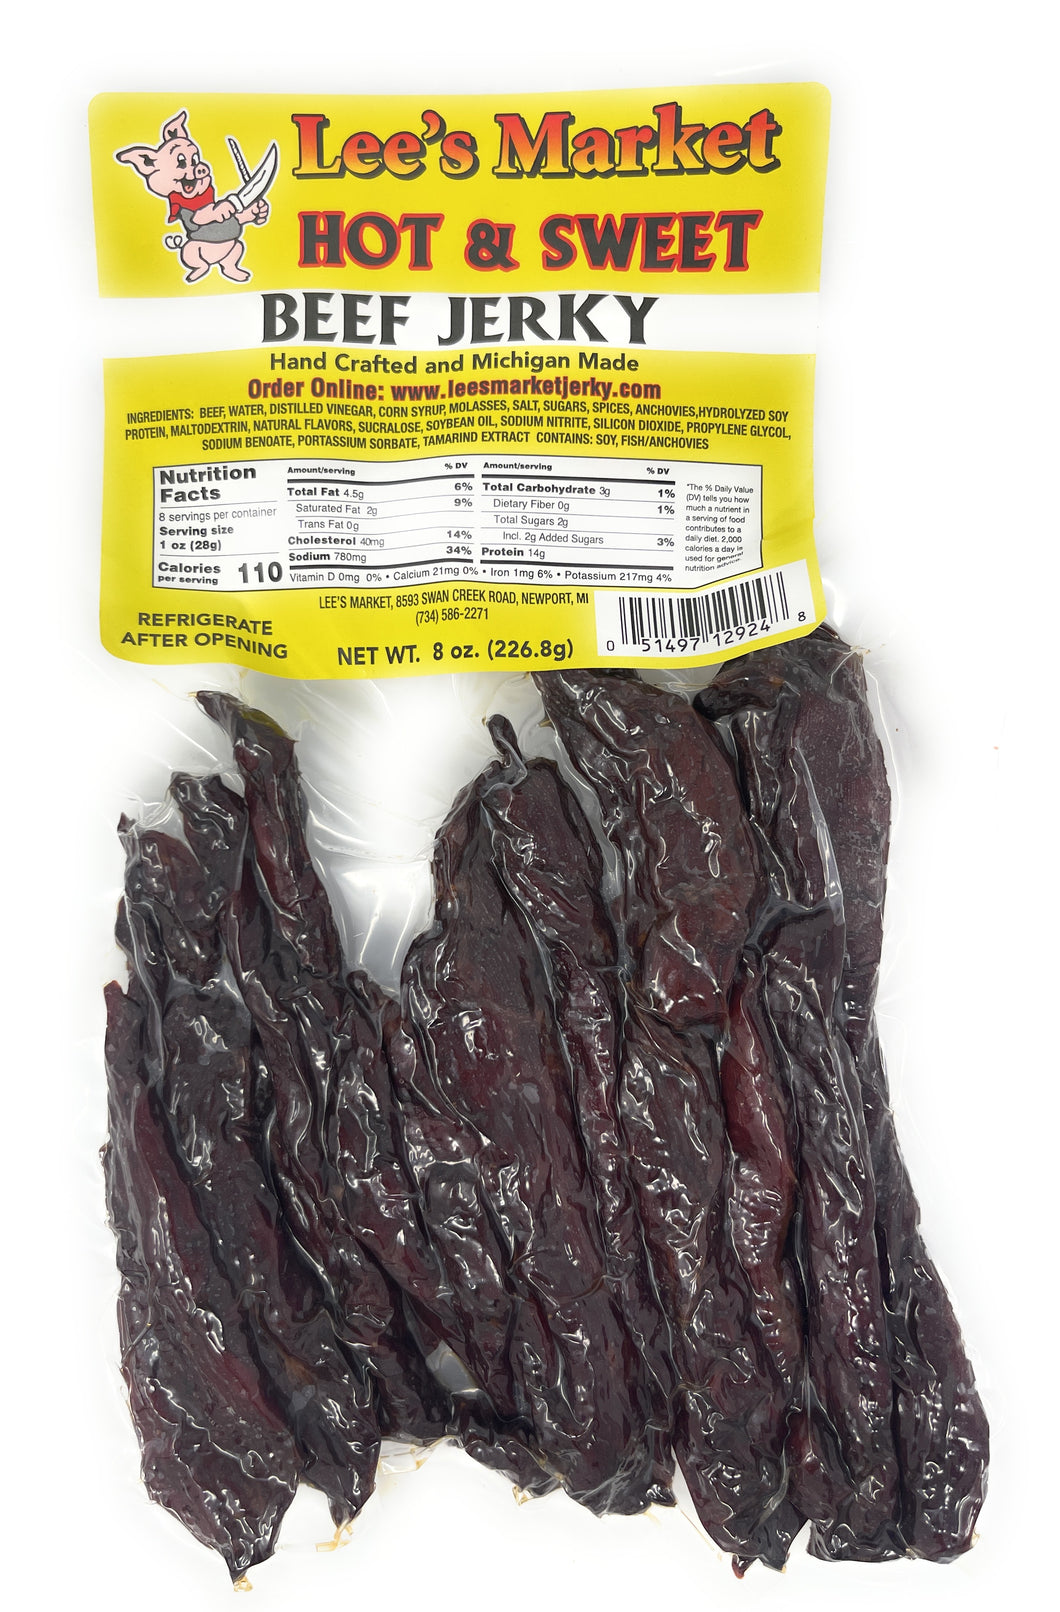 Hot & Sweet Beef Jerky